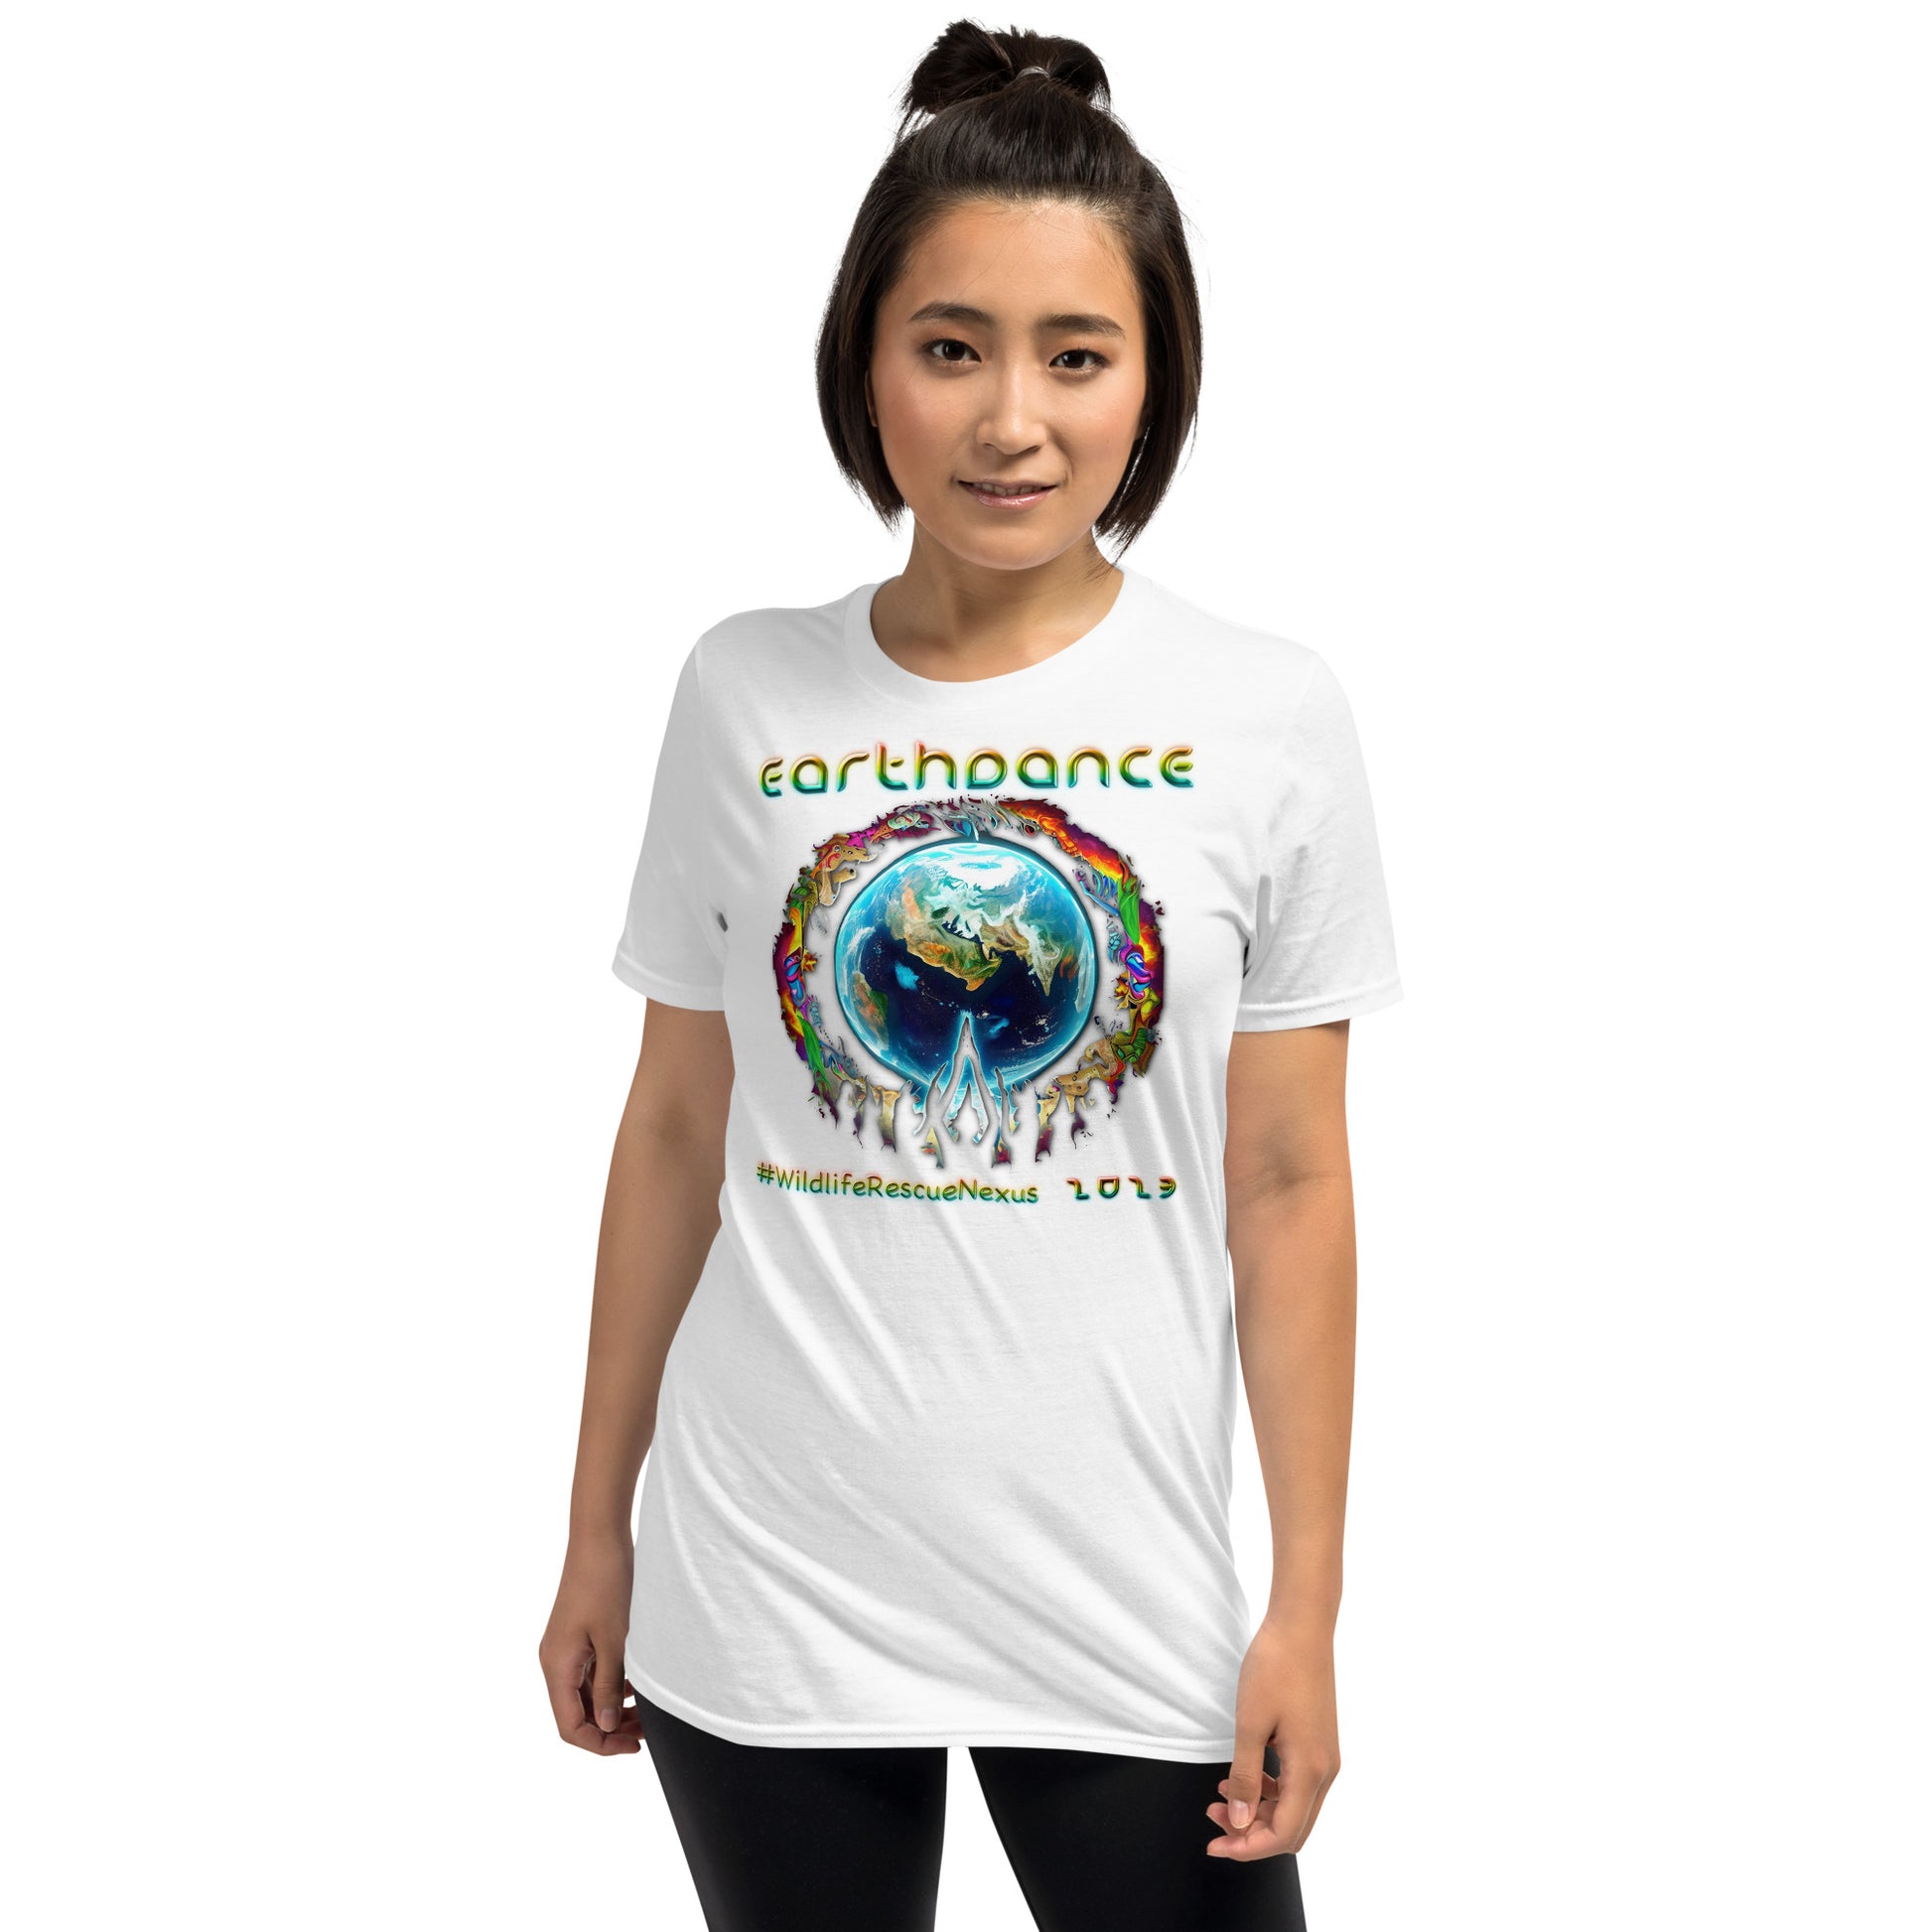 Earthdance 2023 - Dj Nattii-Lee v1 - Limited Edition - Short-Sleeve Unisex T-Shirt - The Foundation of Families